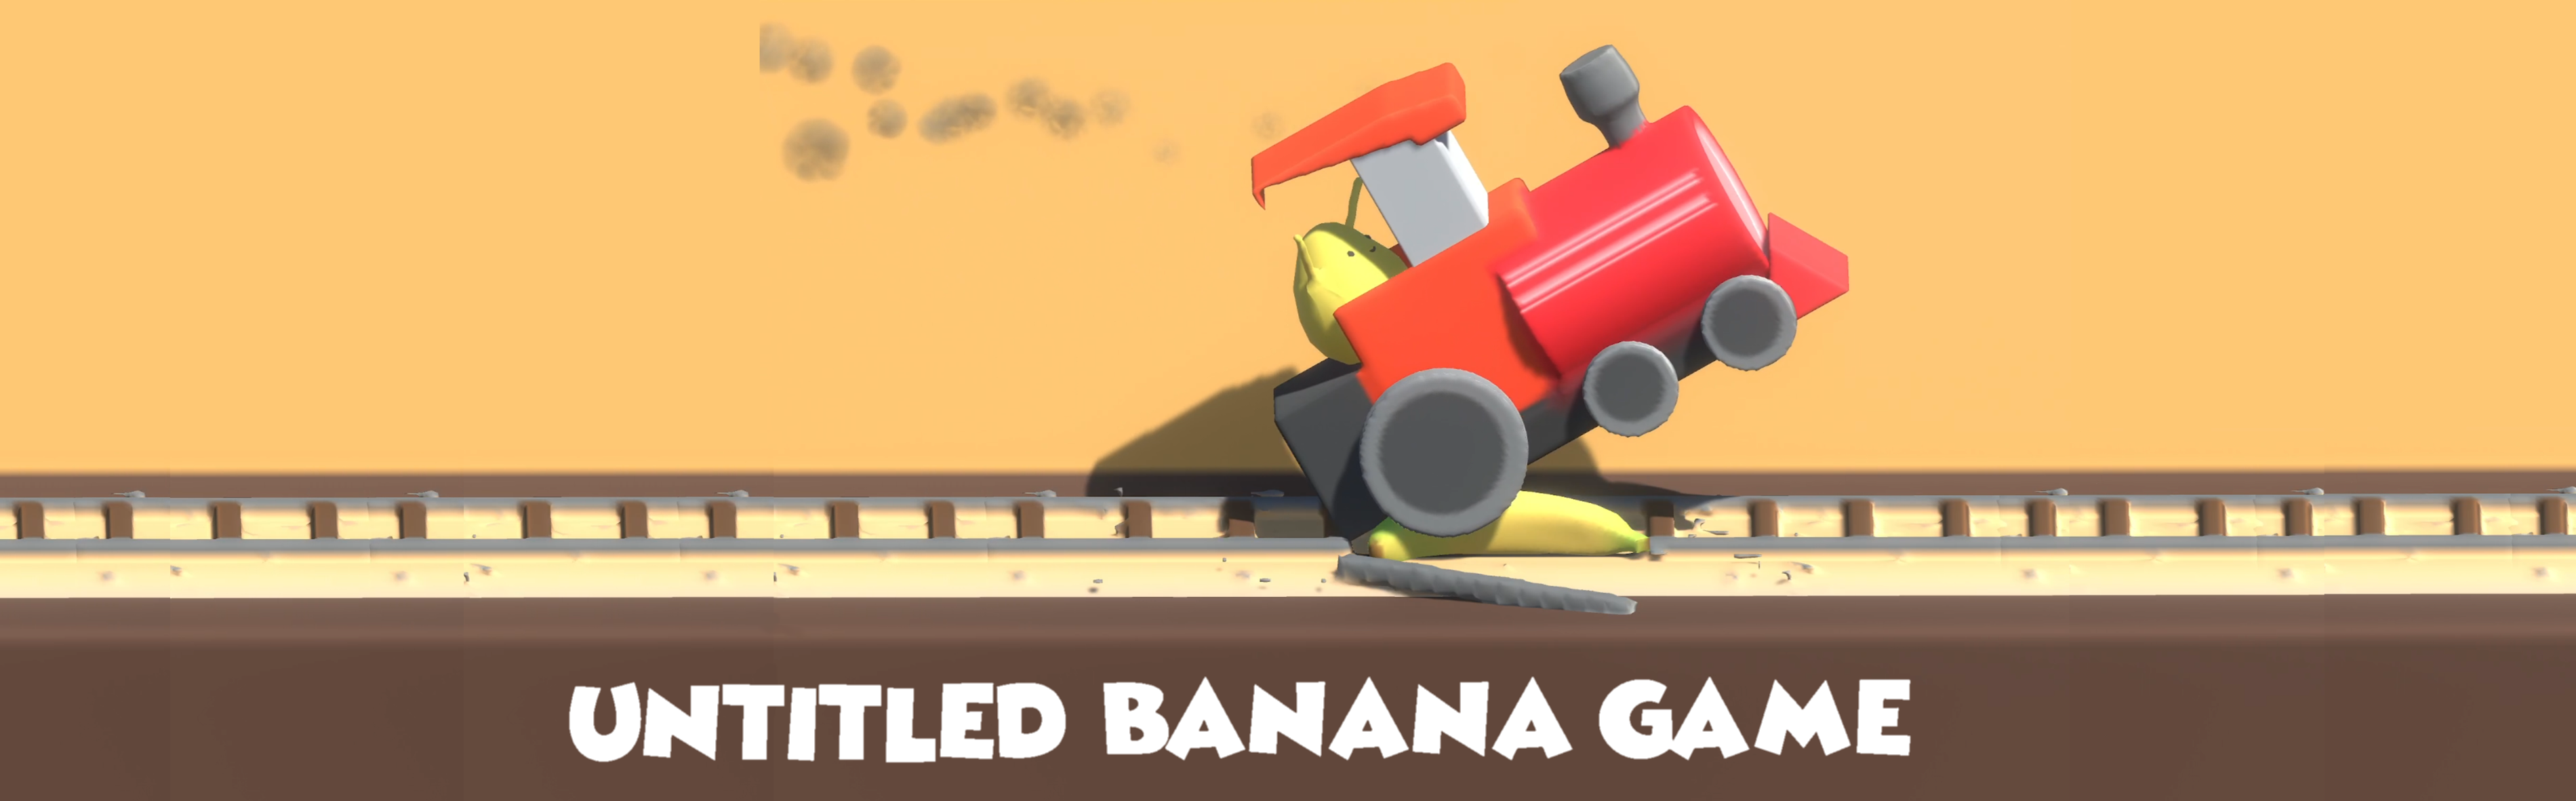 Untitled Banana Game